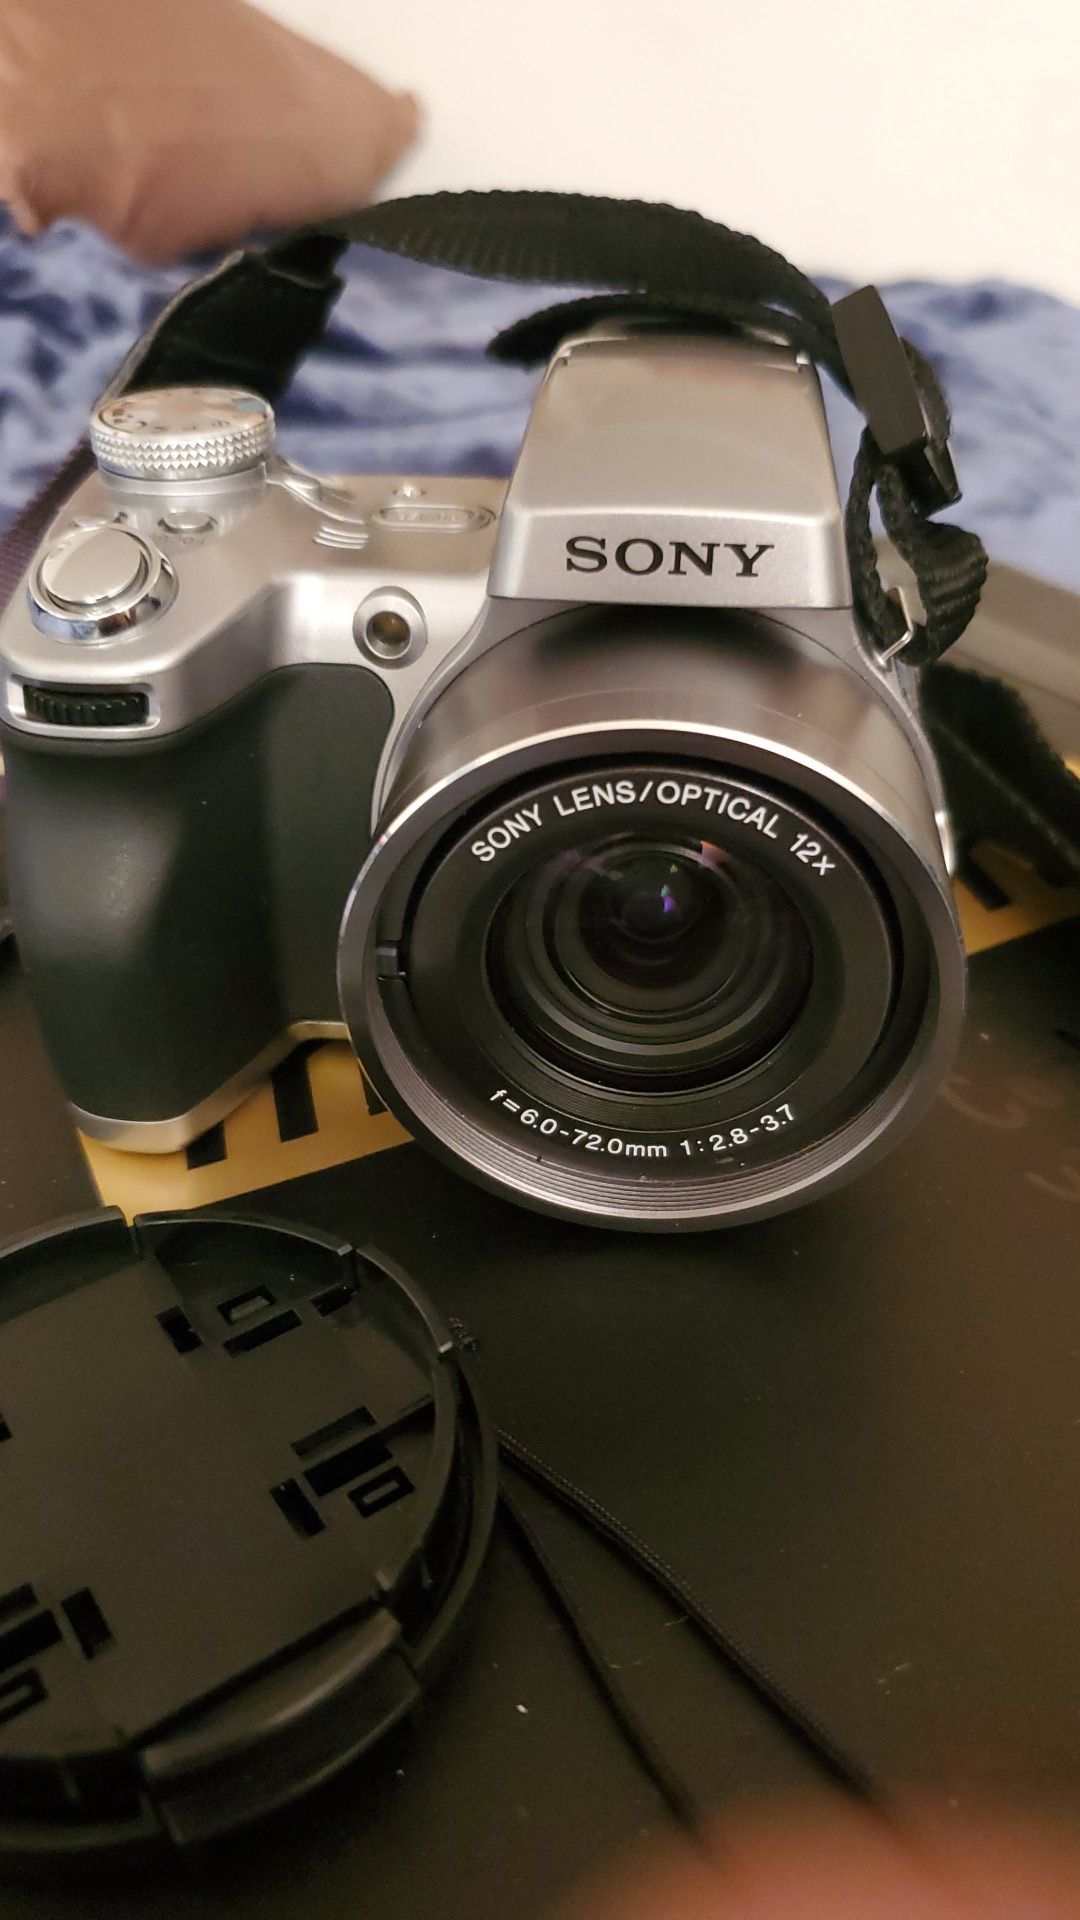 Sony Cyber-shot camera